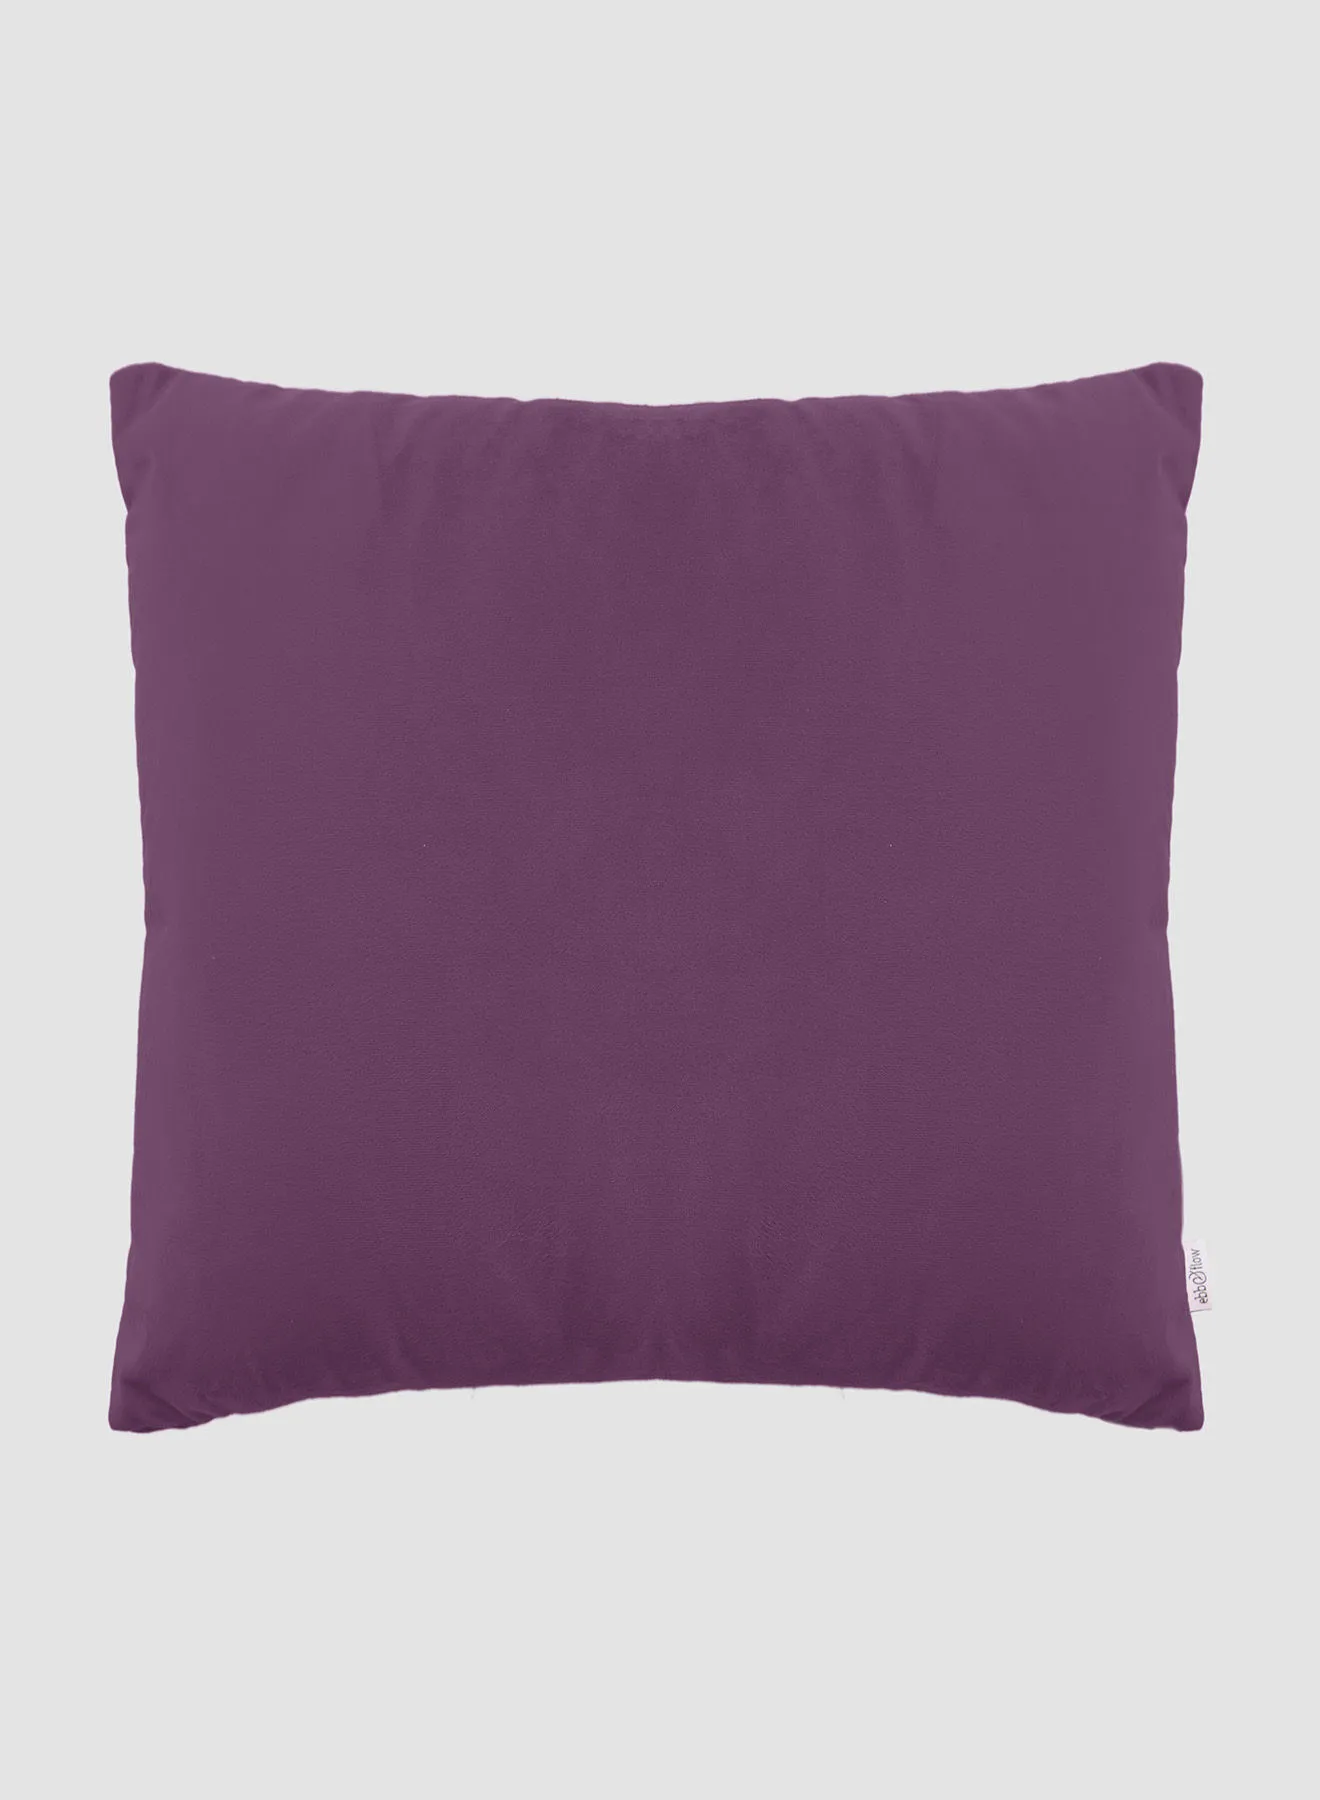 ebb & flow Velvet Solid Color Cushion, Unique Luxury Quality Decor Items for the Perfect Stylish Home Purple 55 x 55cm